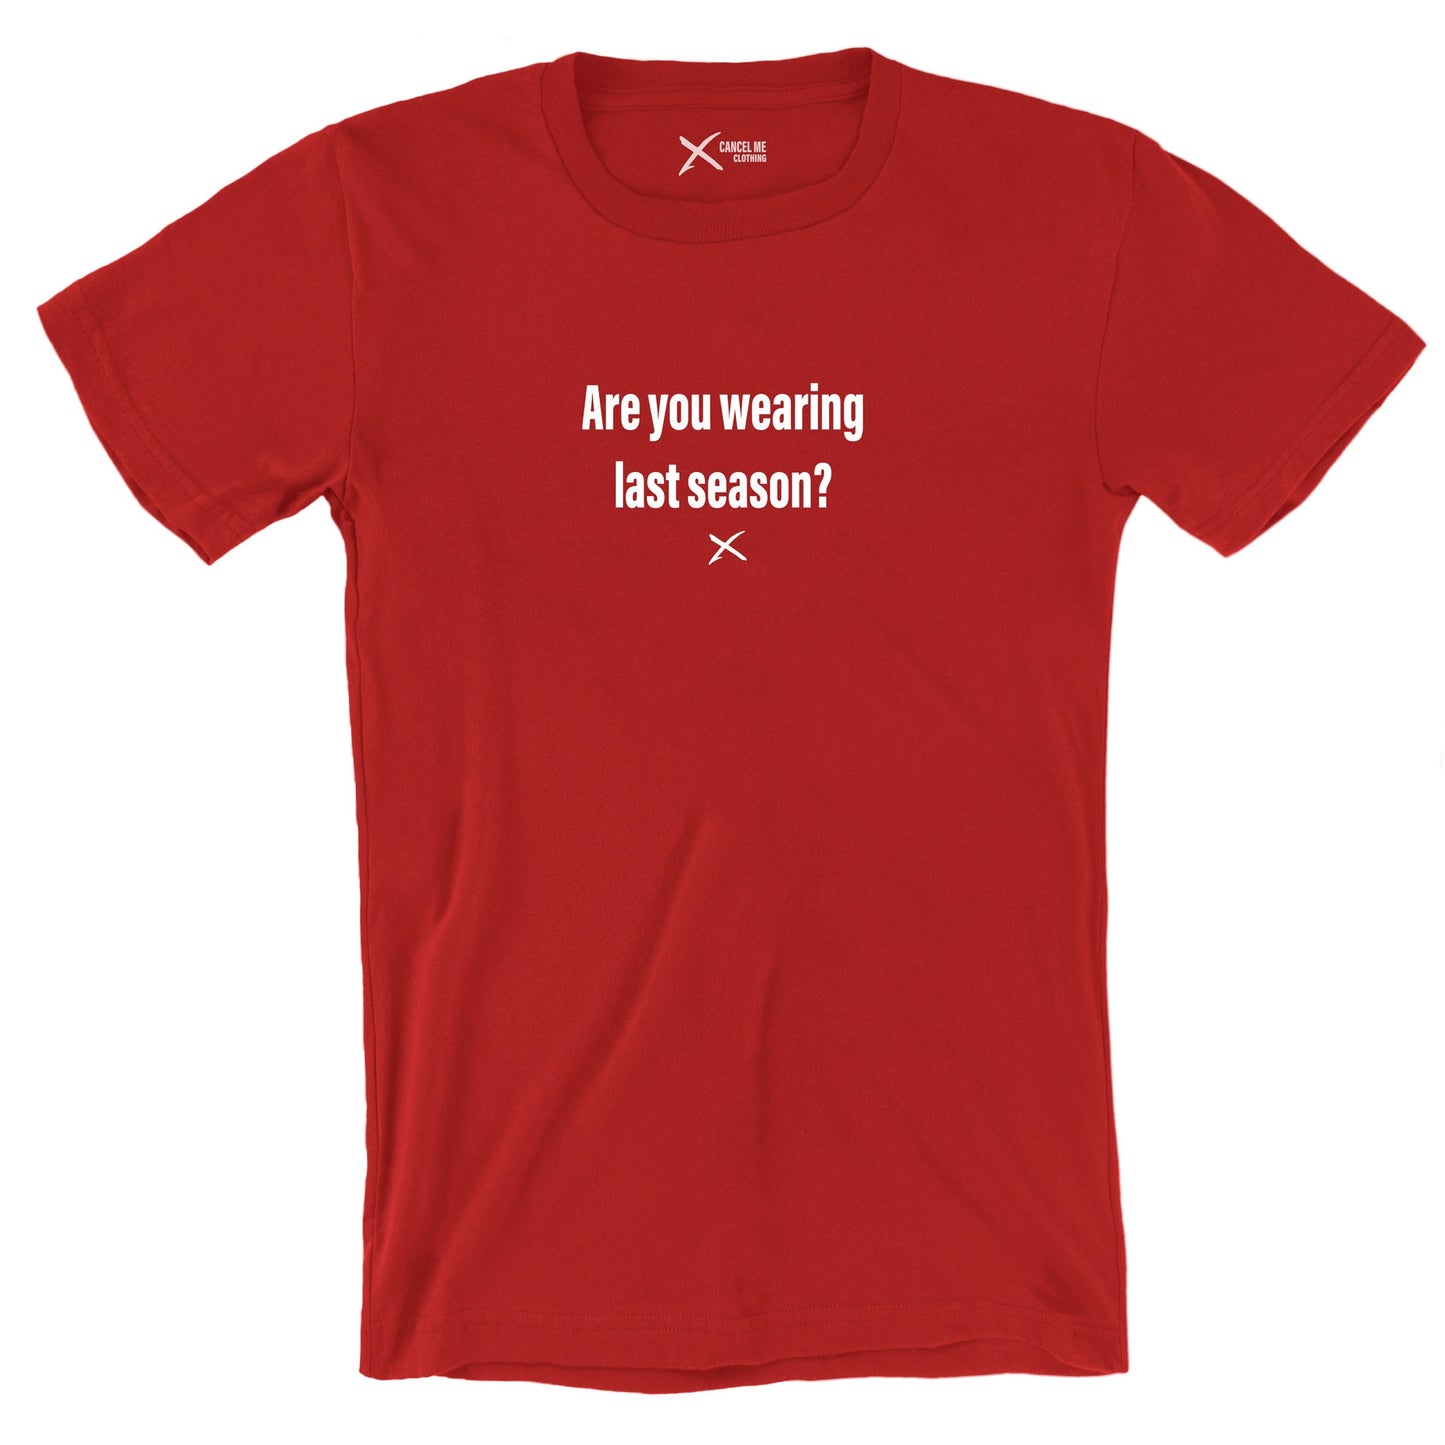 Are you wearing last season? - Shirt